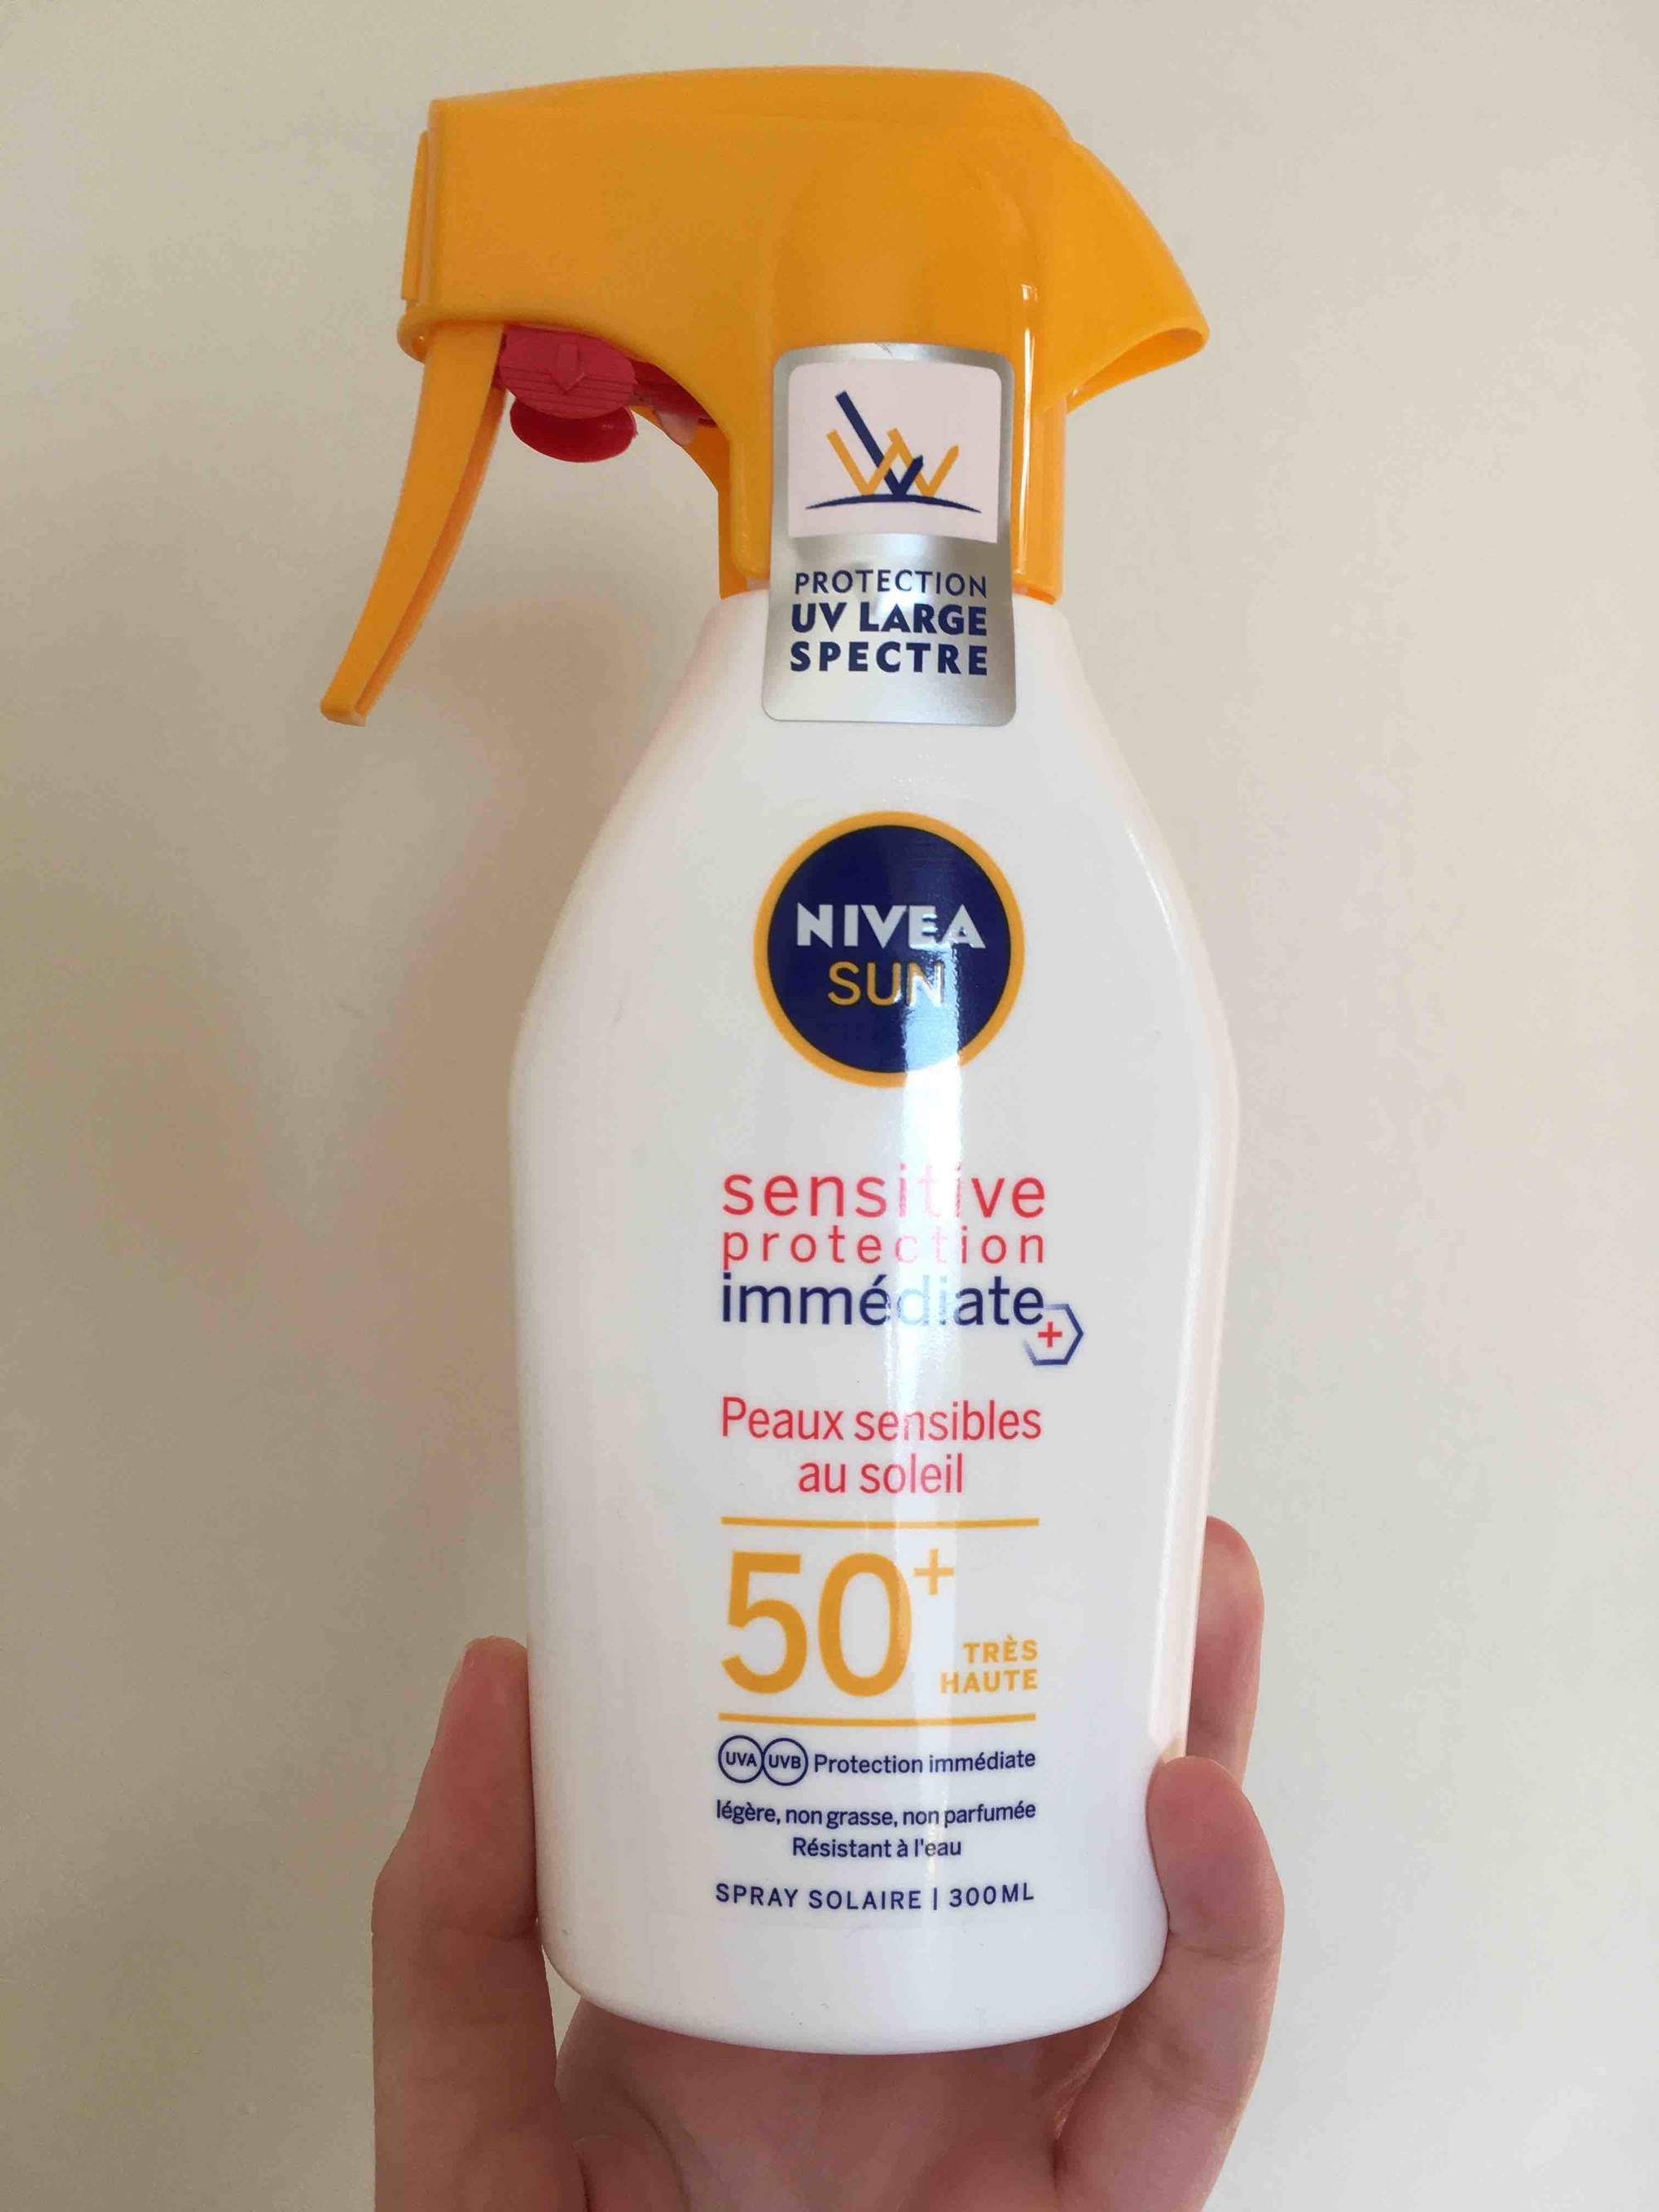 NIVEA - Sensitive protection immédiate - Spray solaire 50+